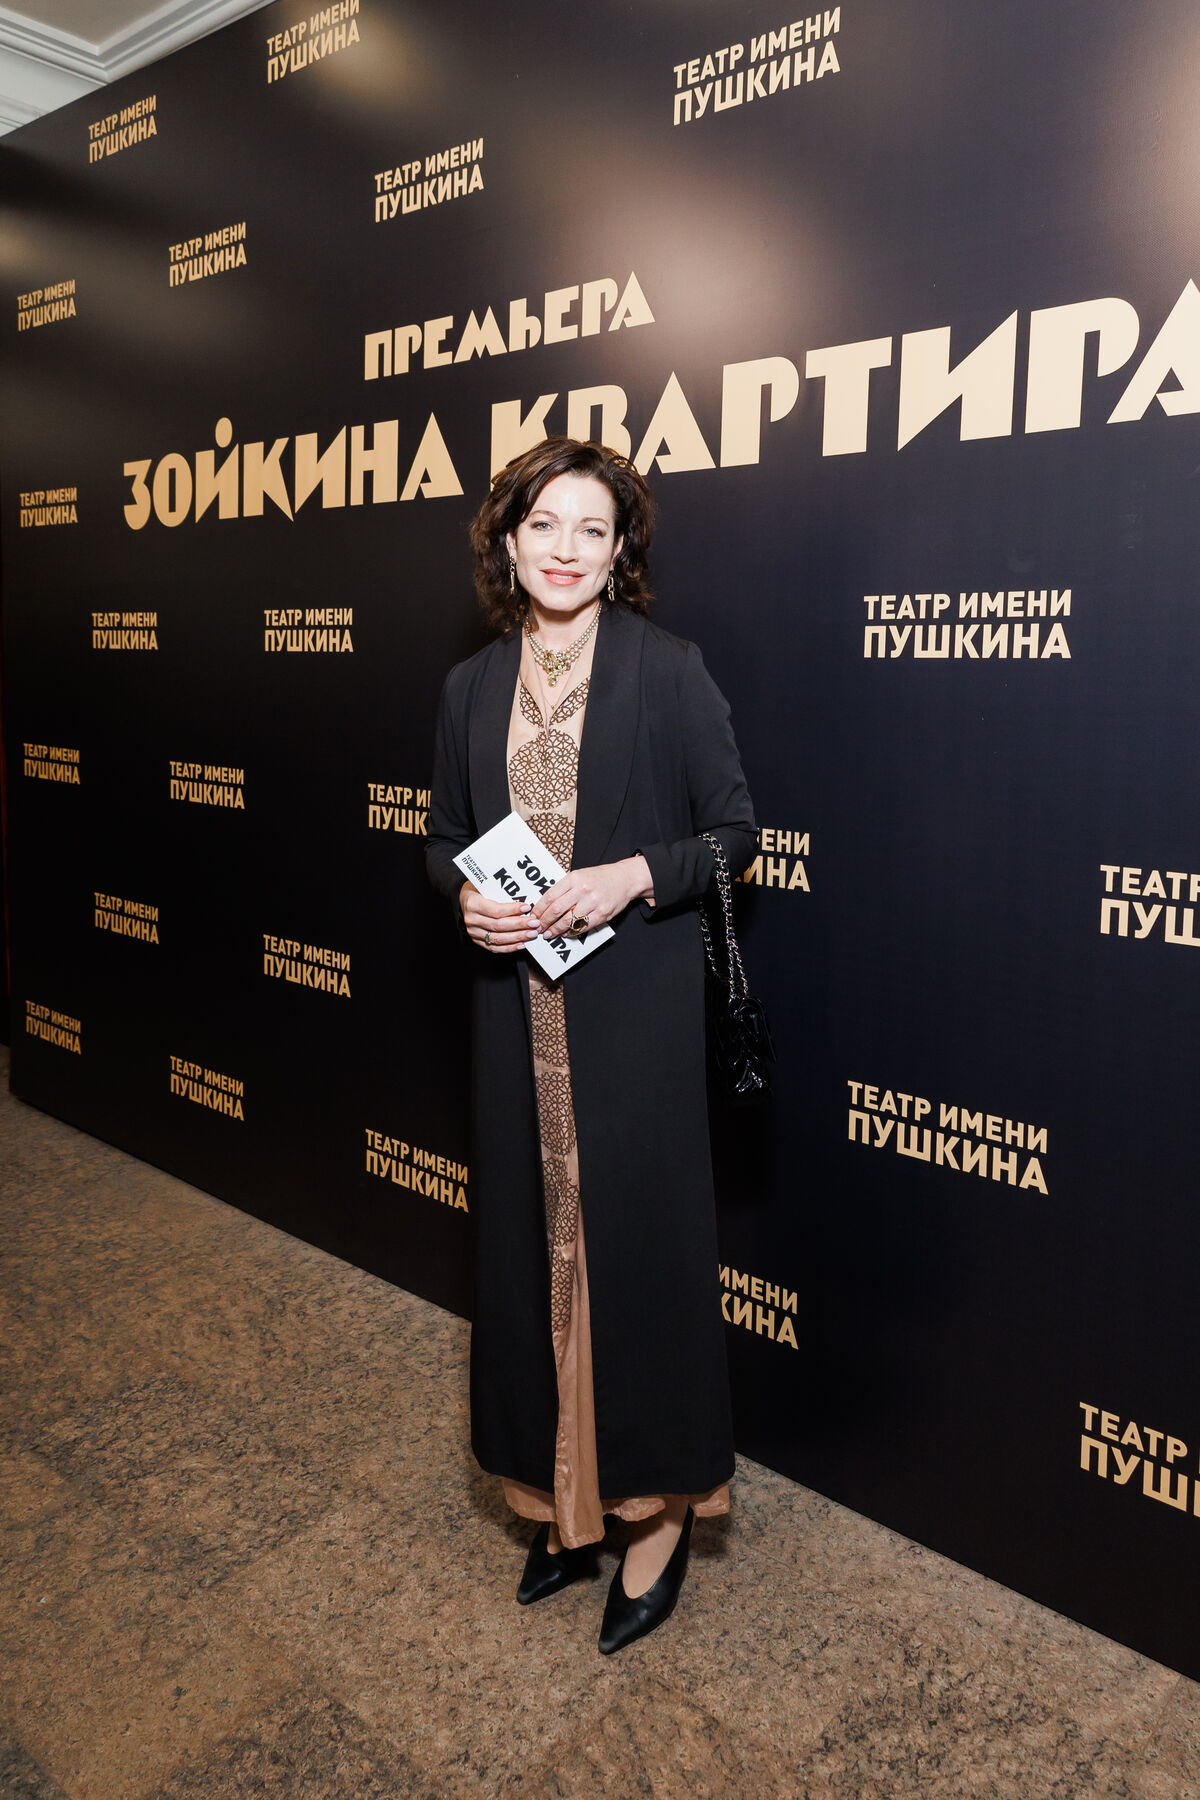 Алёна Хмельницкая, актриса